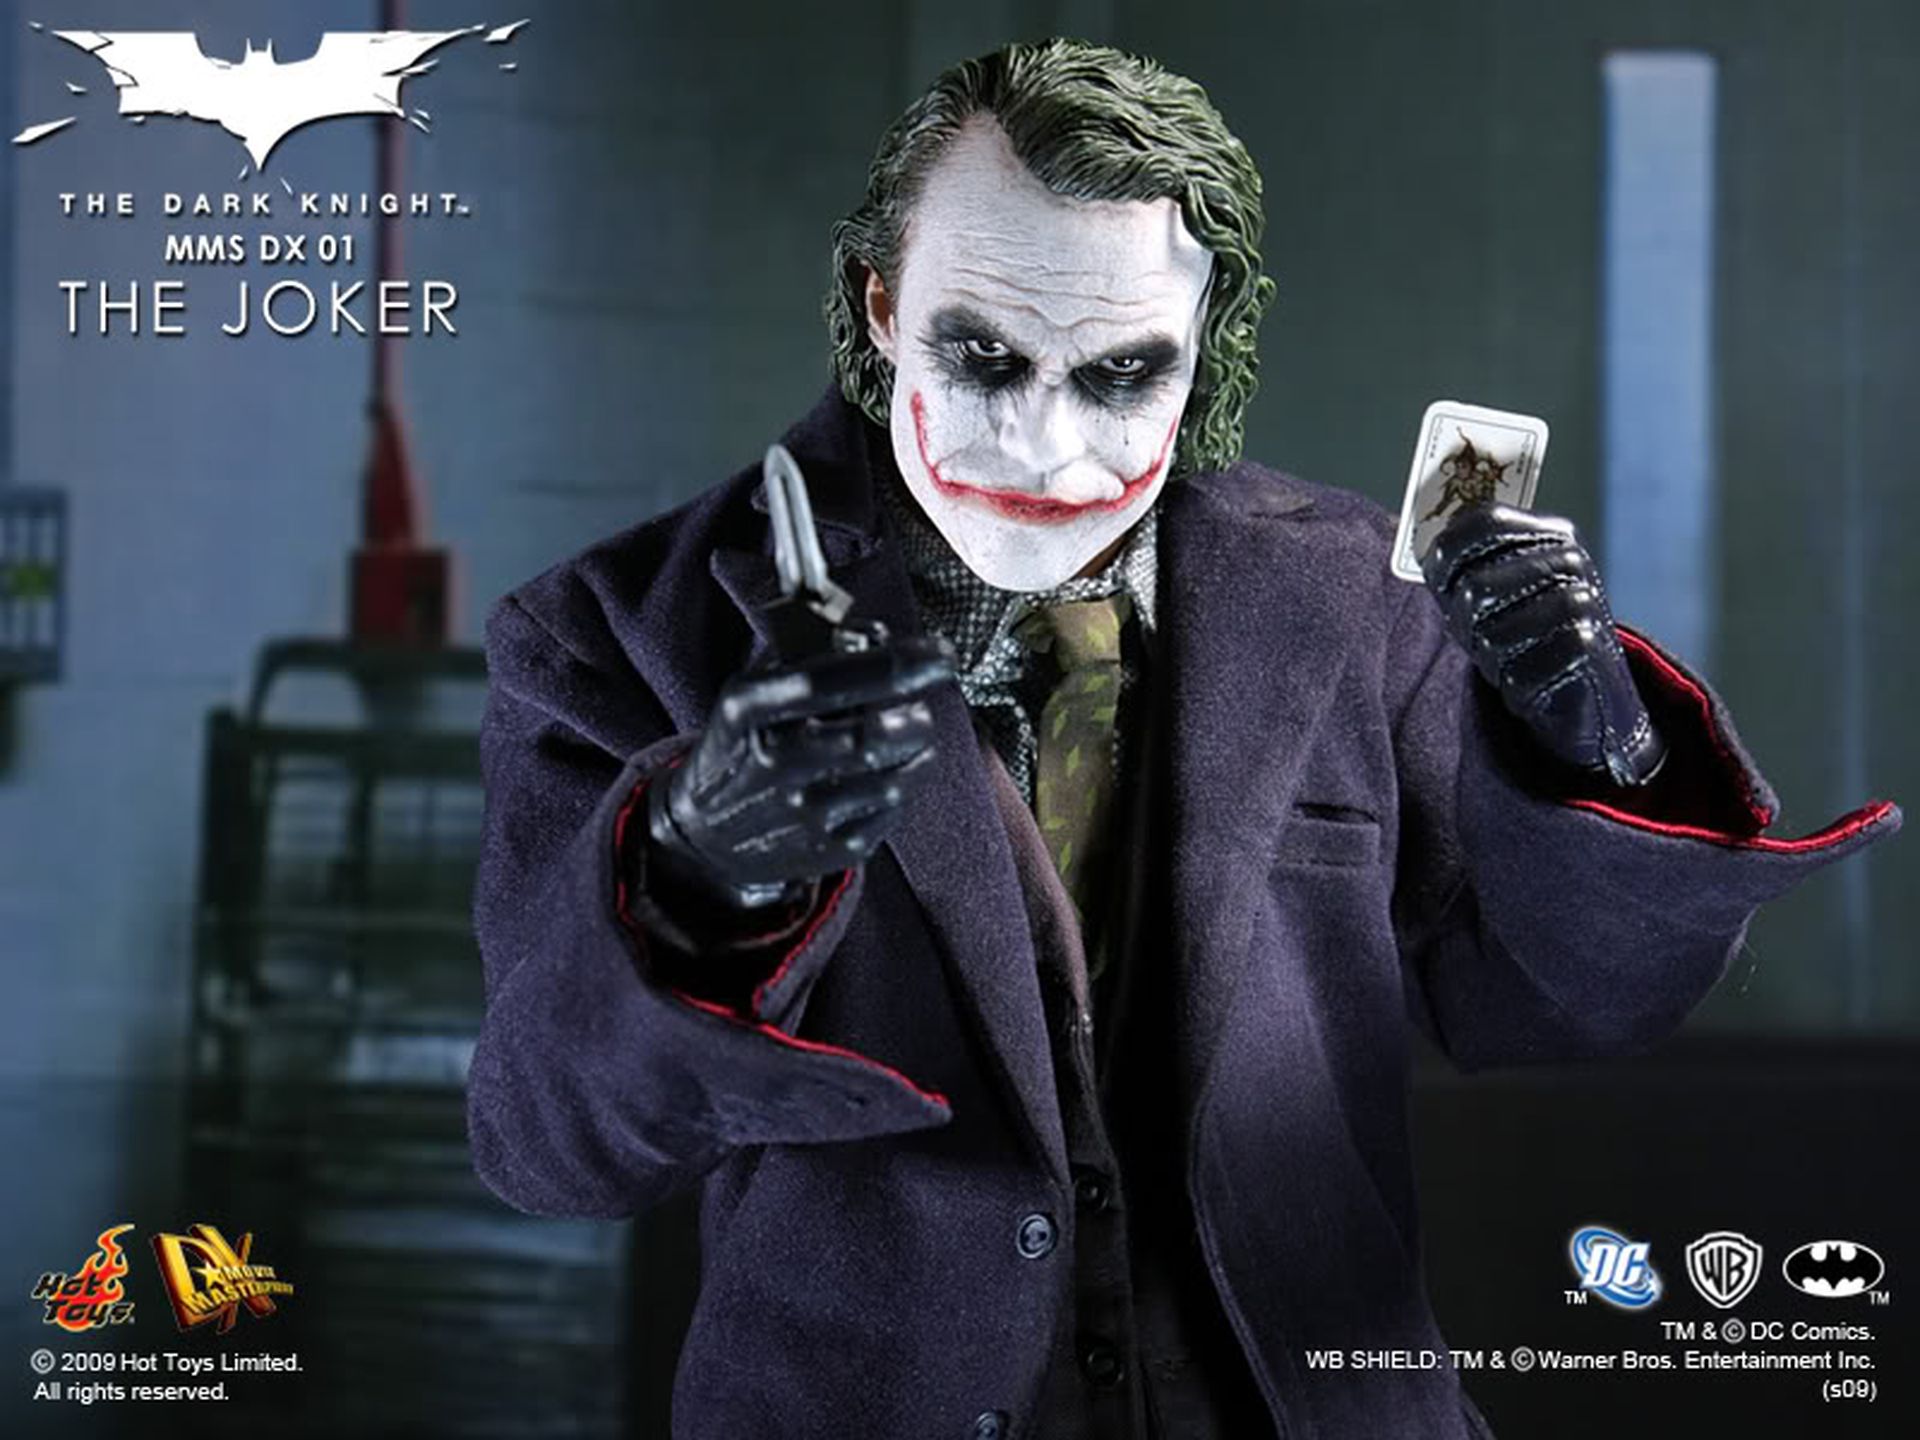 10. The Joker (The Dark Knight) - DX01